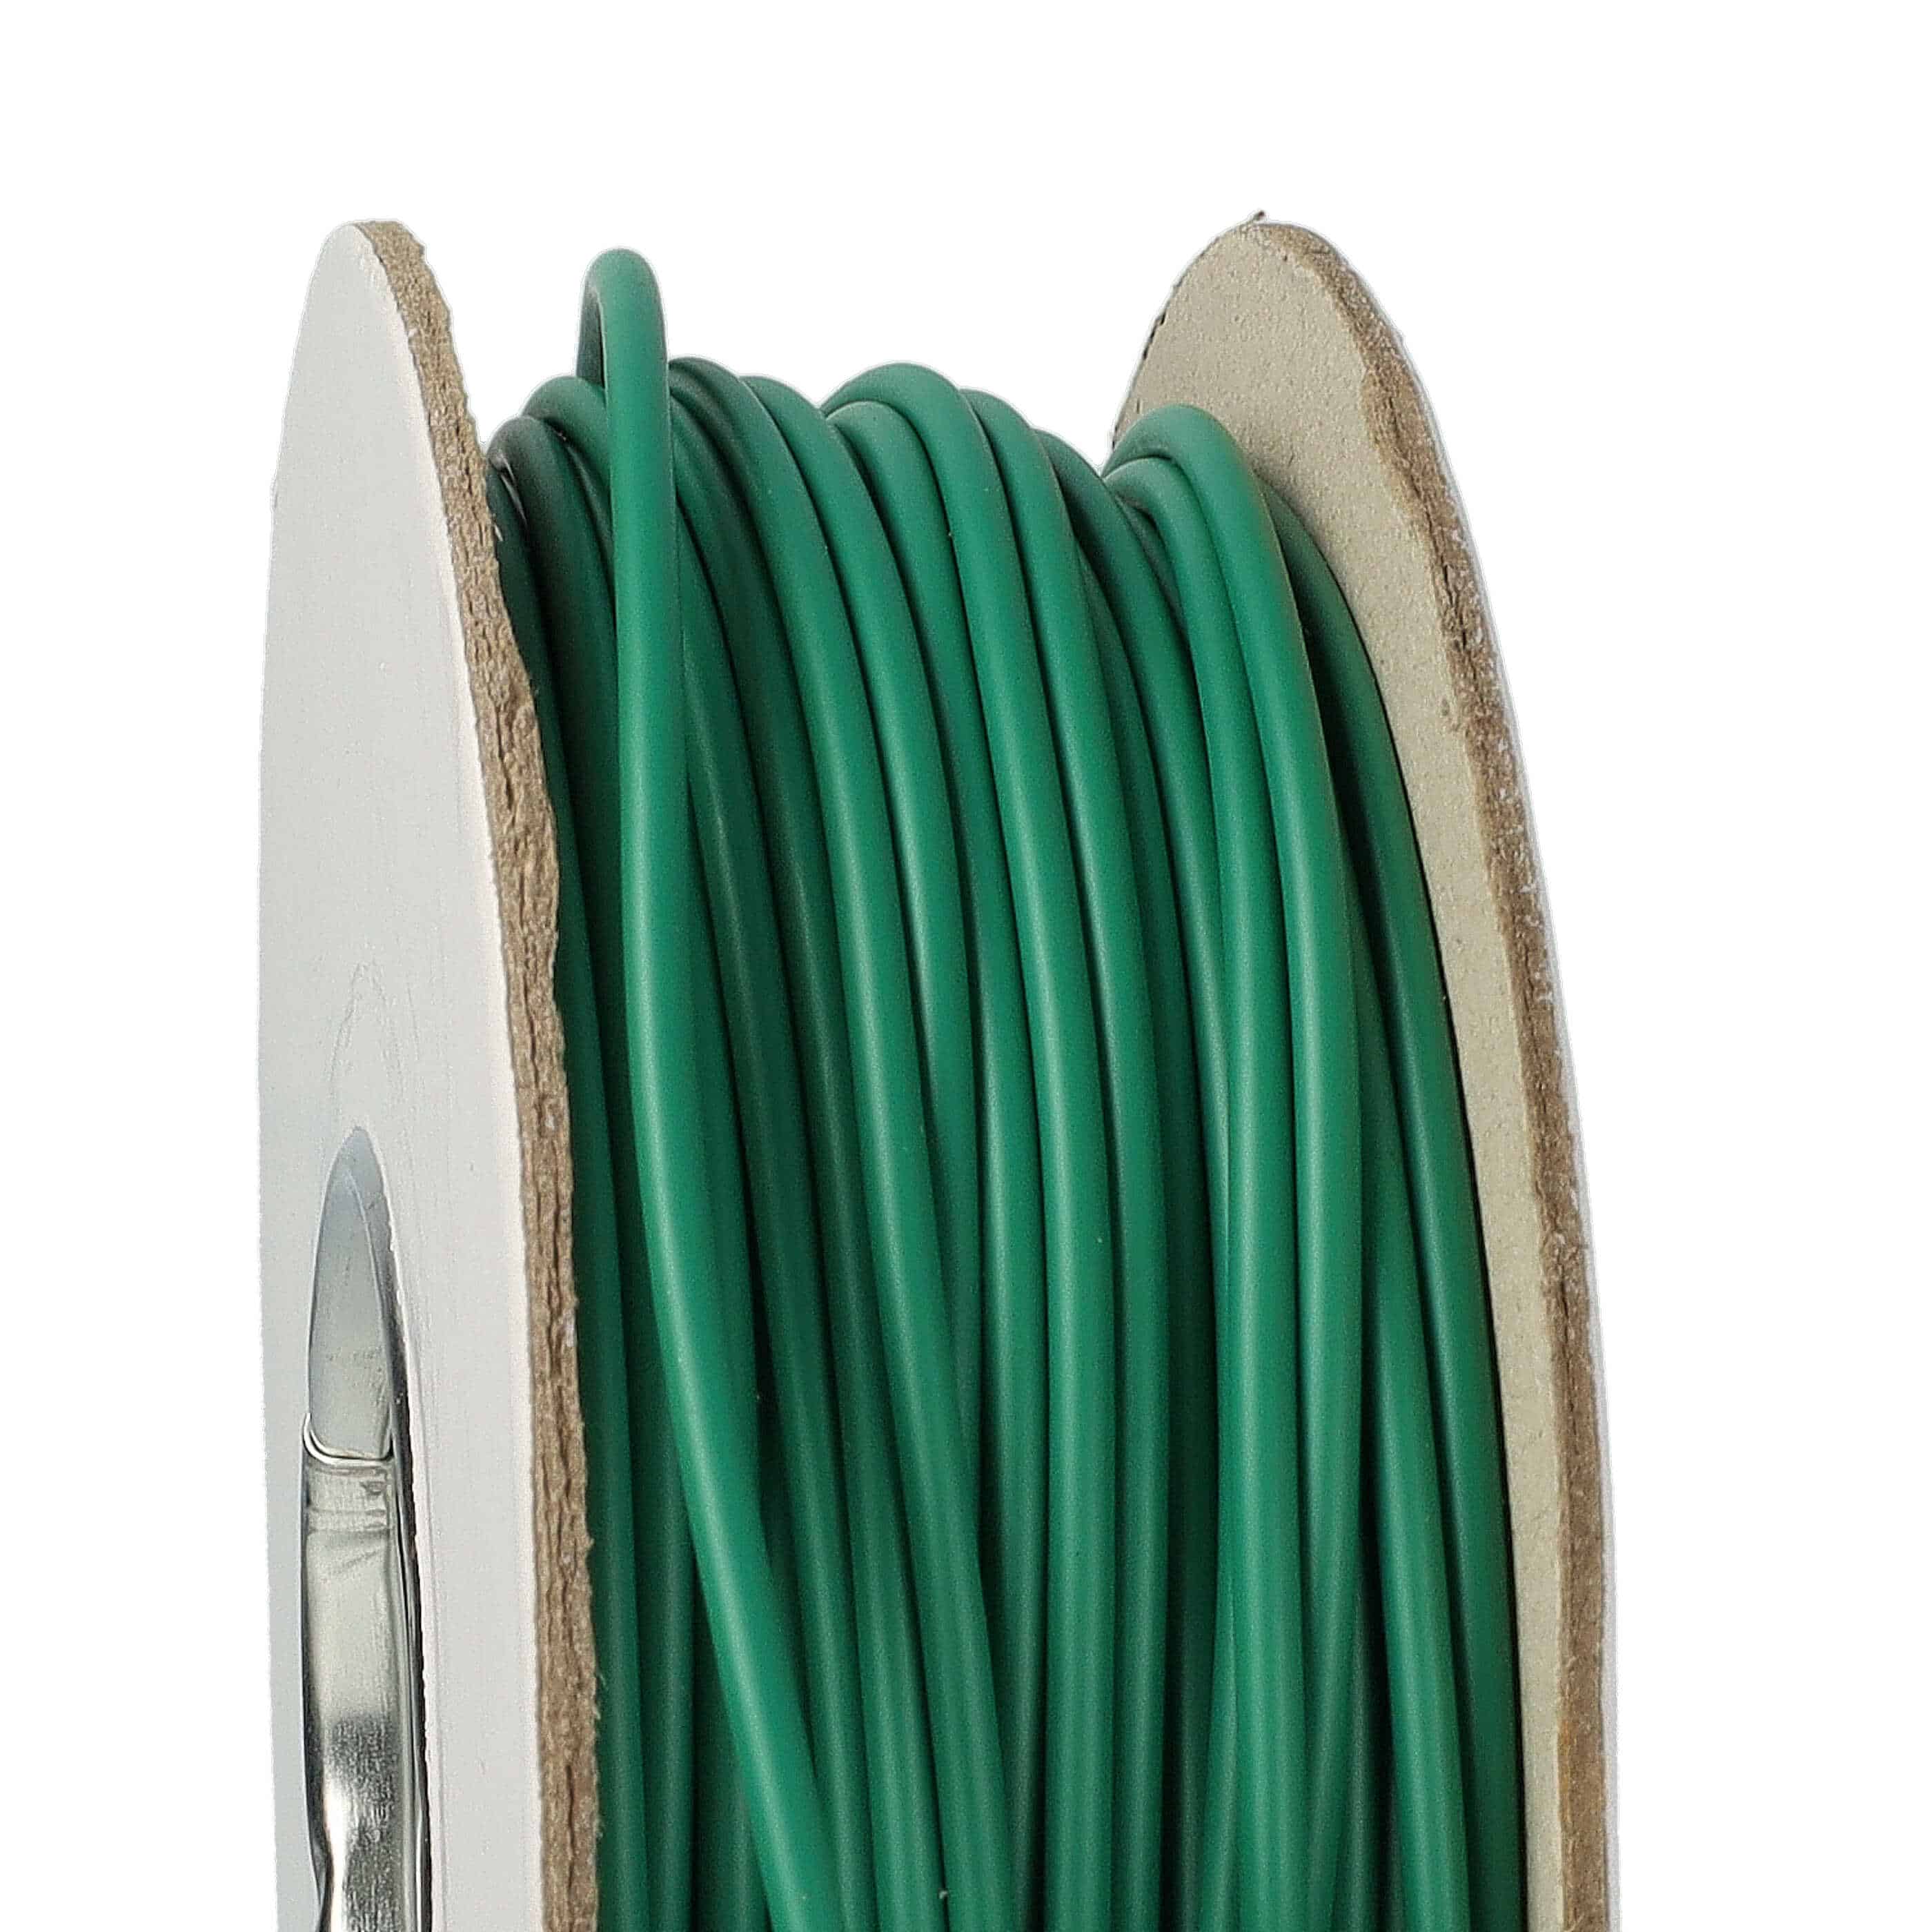 4x Cable delimitador compatible con robots cortacésped Indego 1000 connect, etc. - 50 m